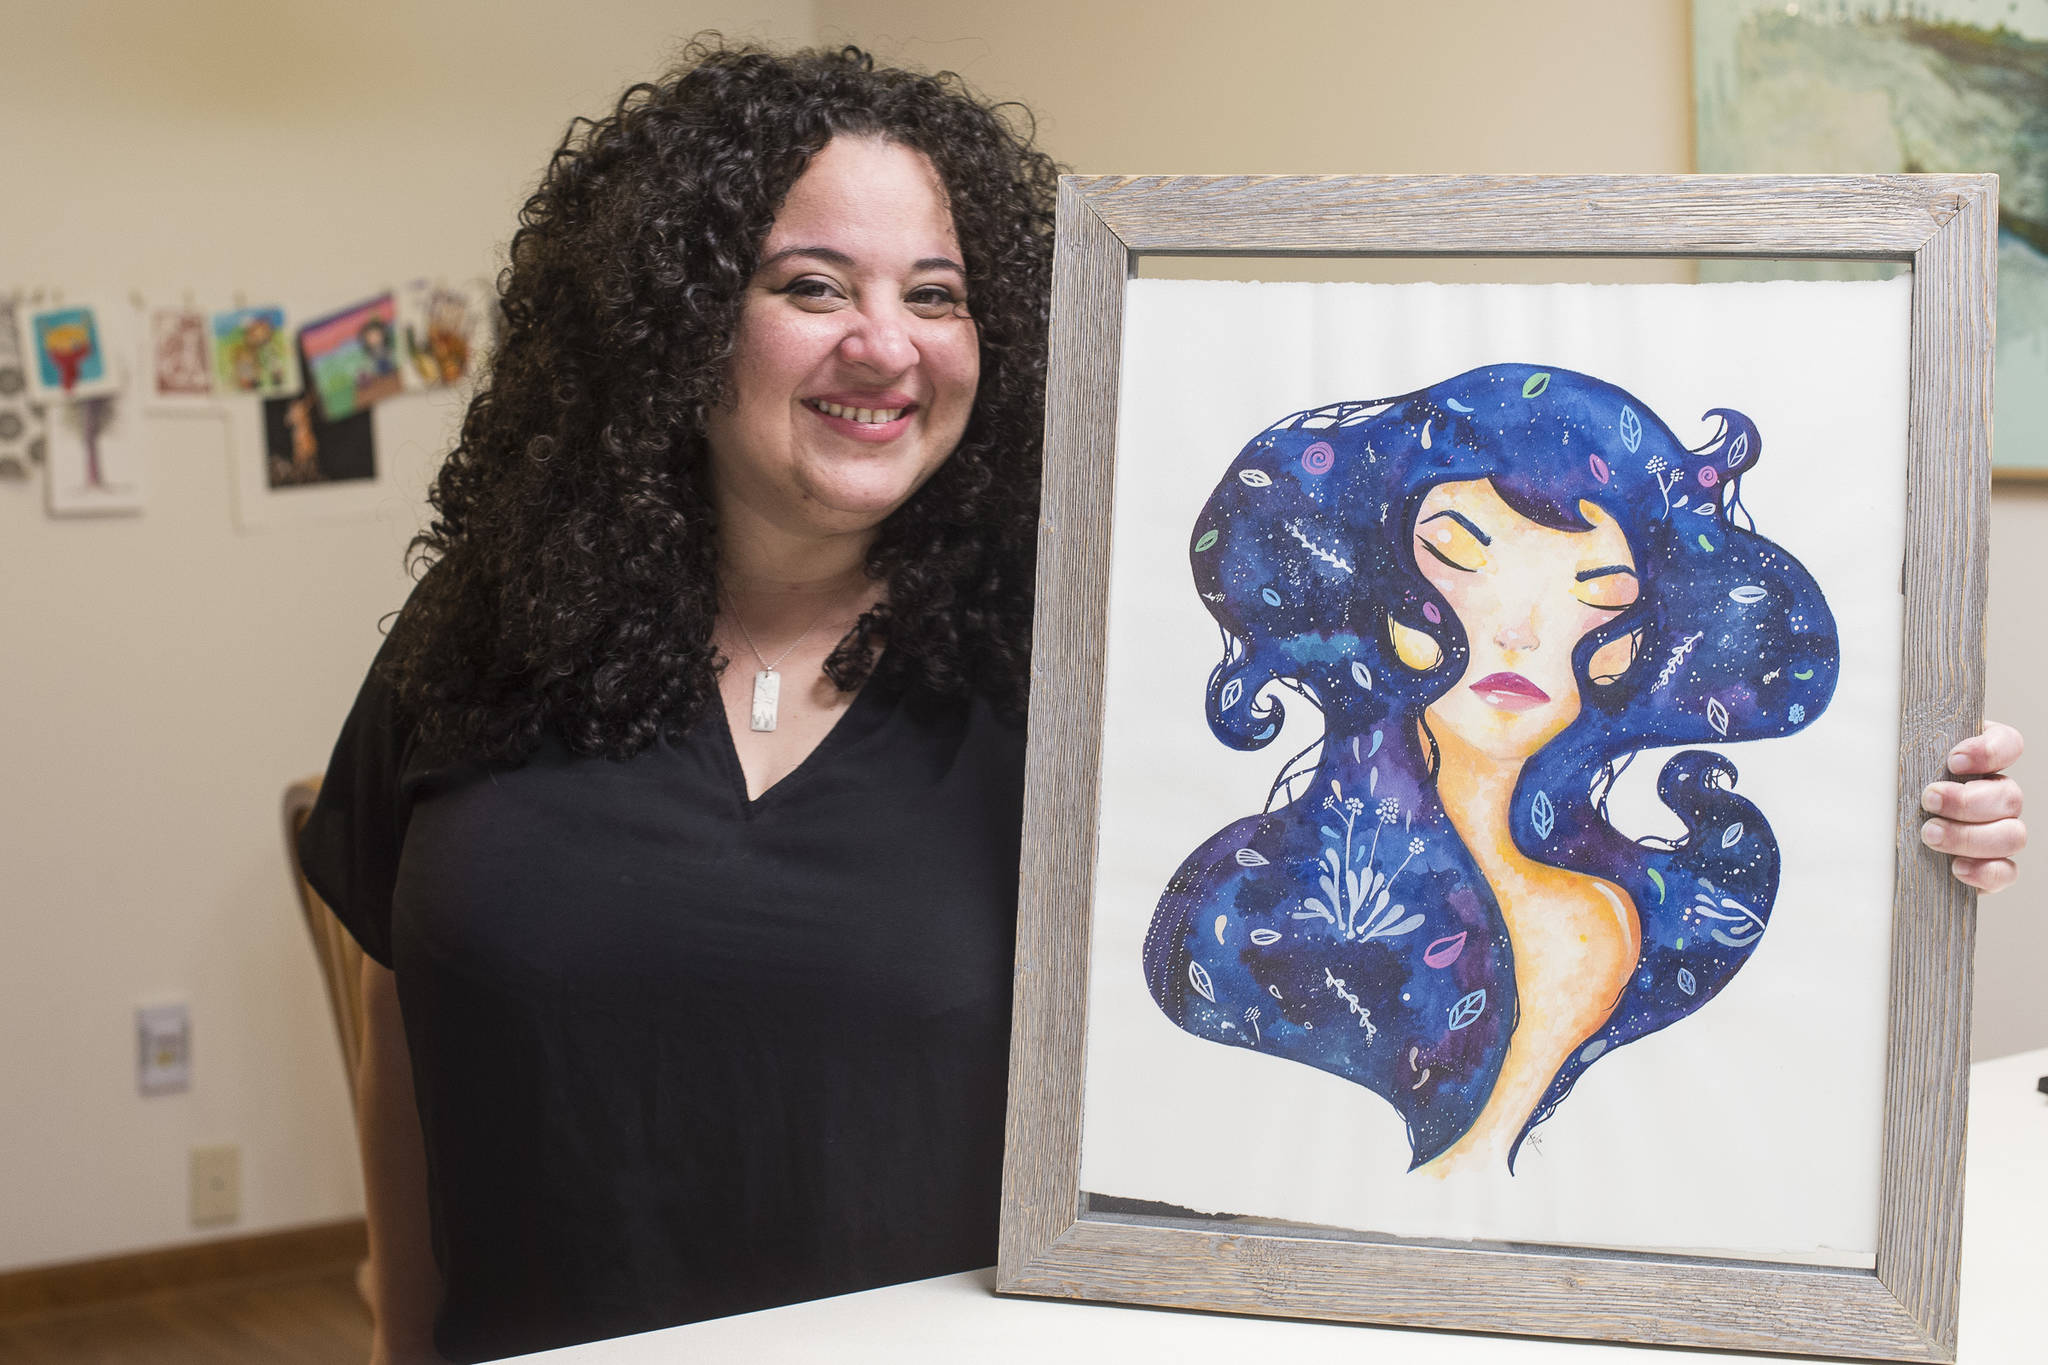 Glo Ramirez shows off her artwork at her Juneau apartment on Monday, Dec. 31, 2018. (Michael Penn | Juneau Empire)